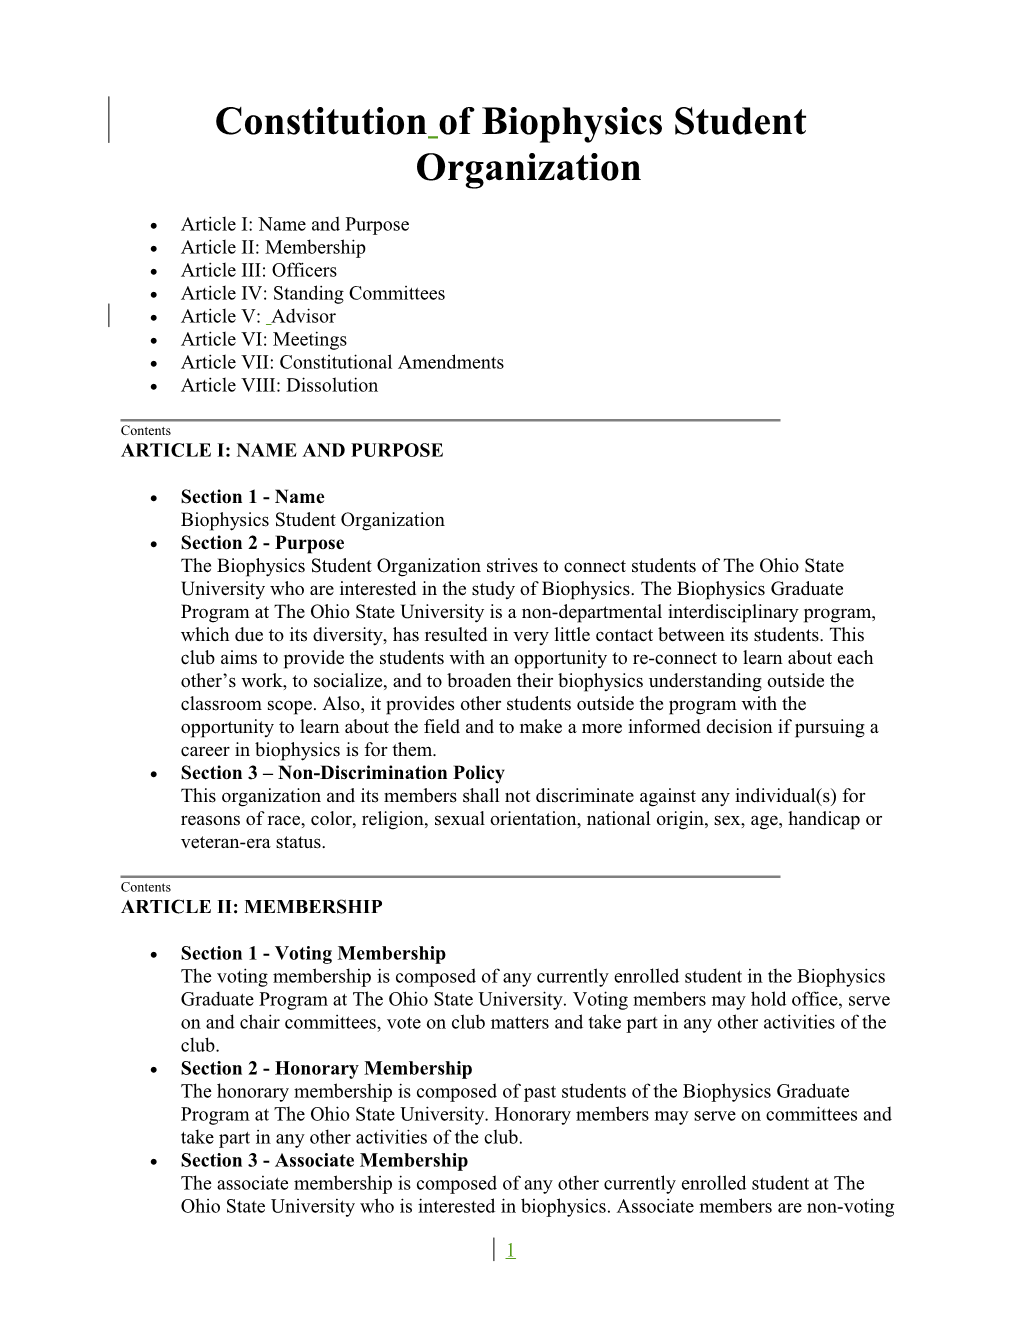 Constitution of Biophysics Student Organization